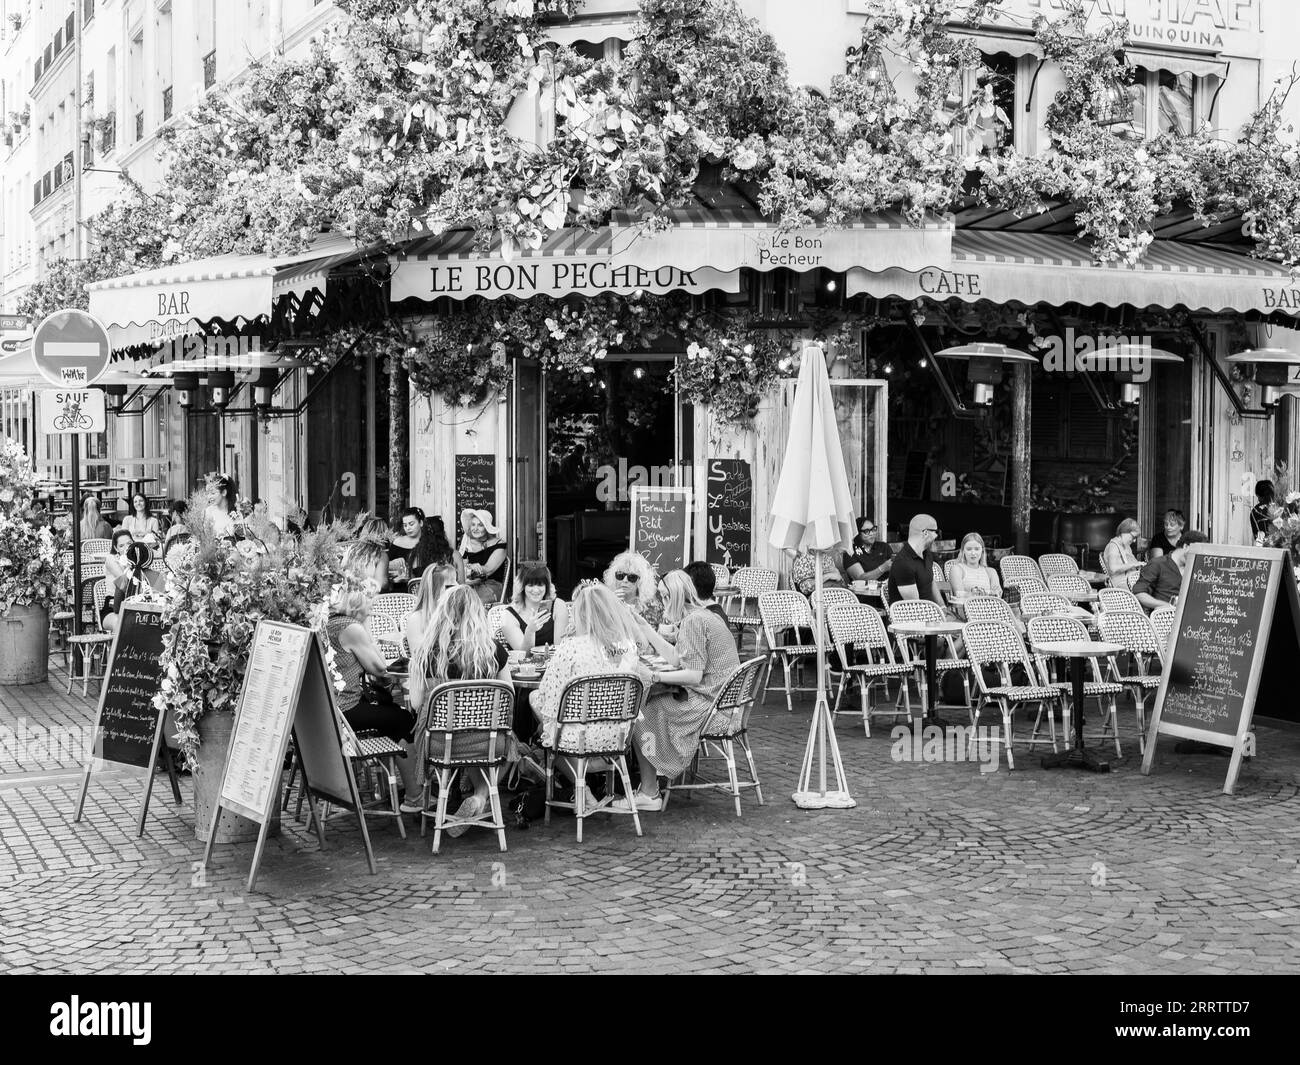 Hen Party, Le Bon Pecheur, Outdoors Seating, Paris, France, Europe, EU. Stock Photo